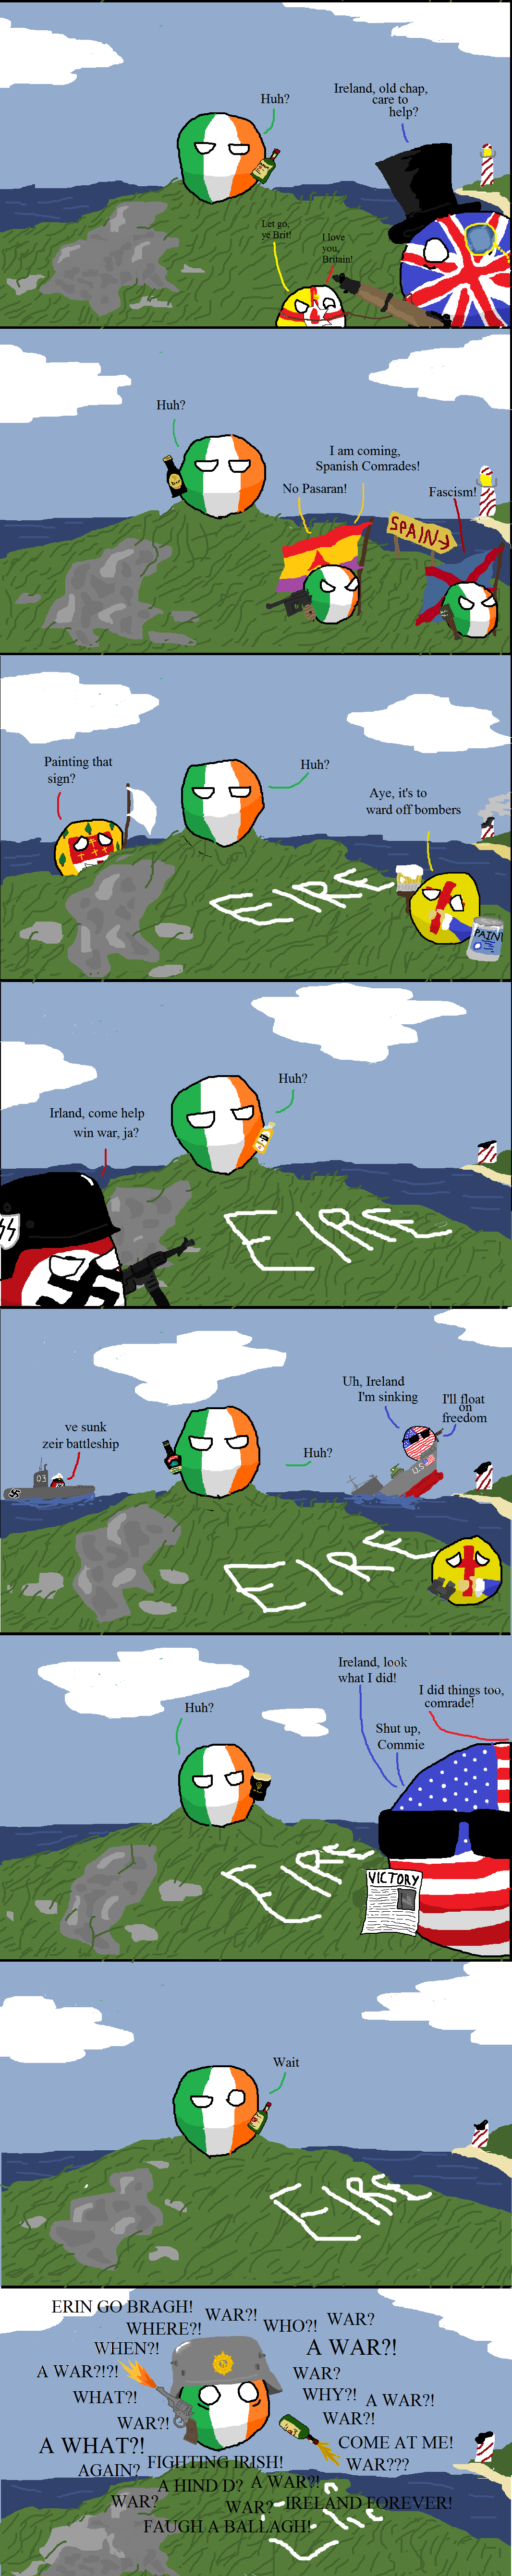 Ireland goes to war